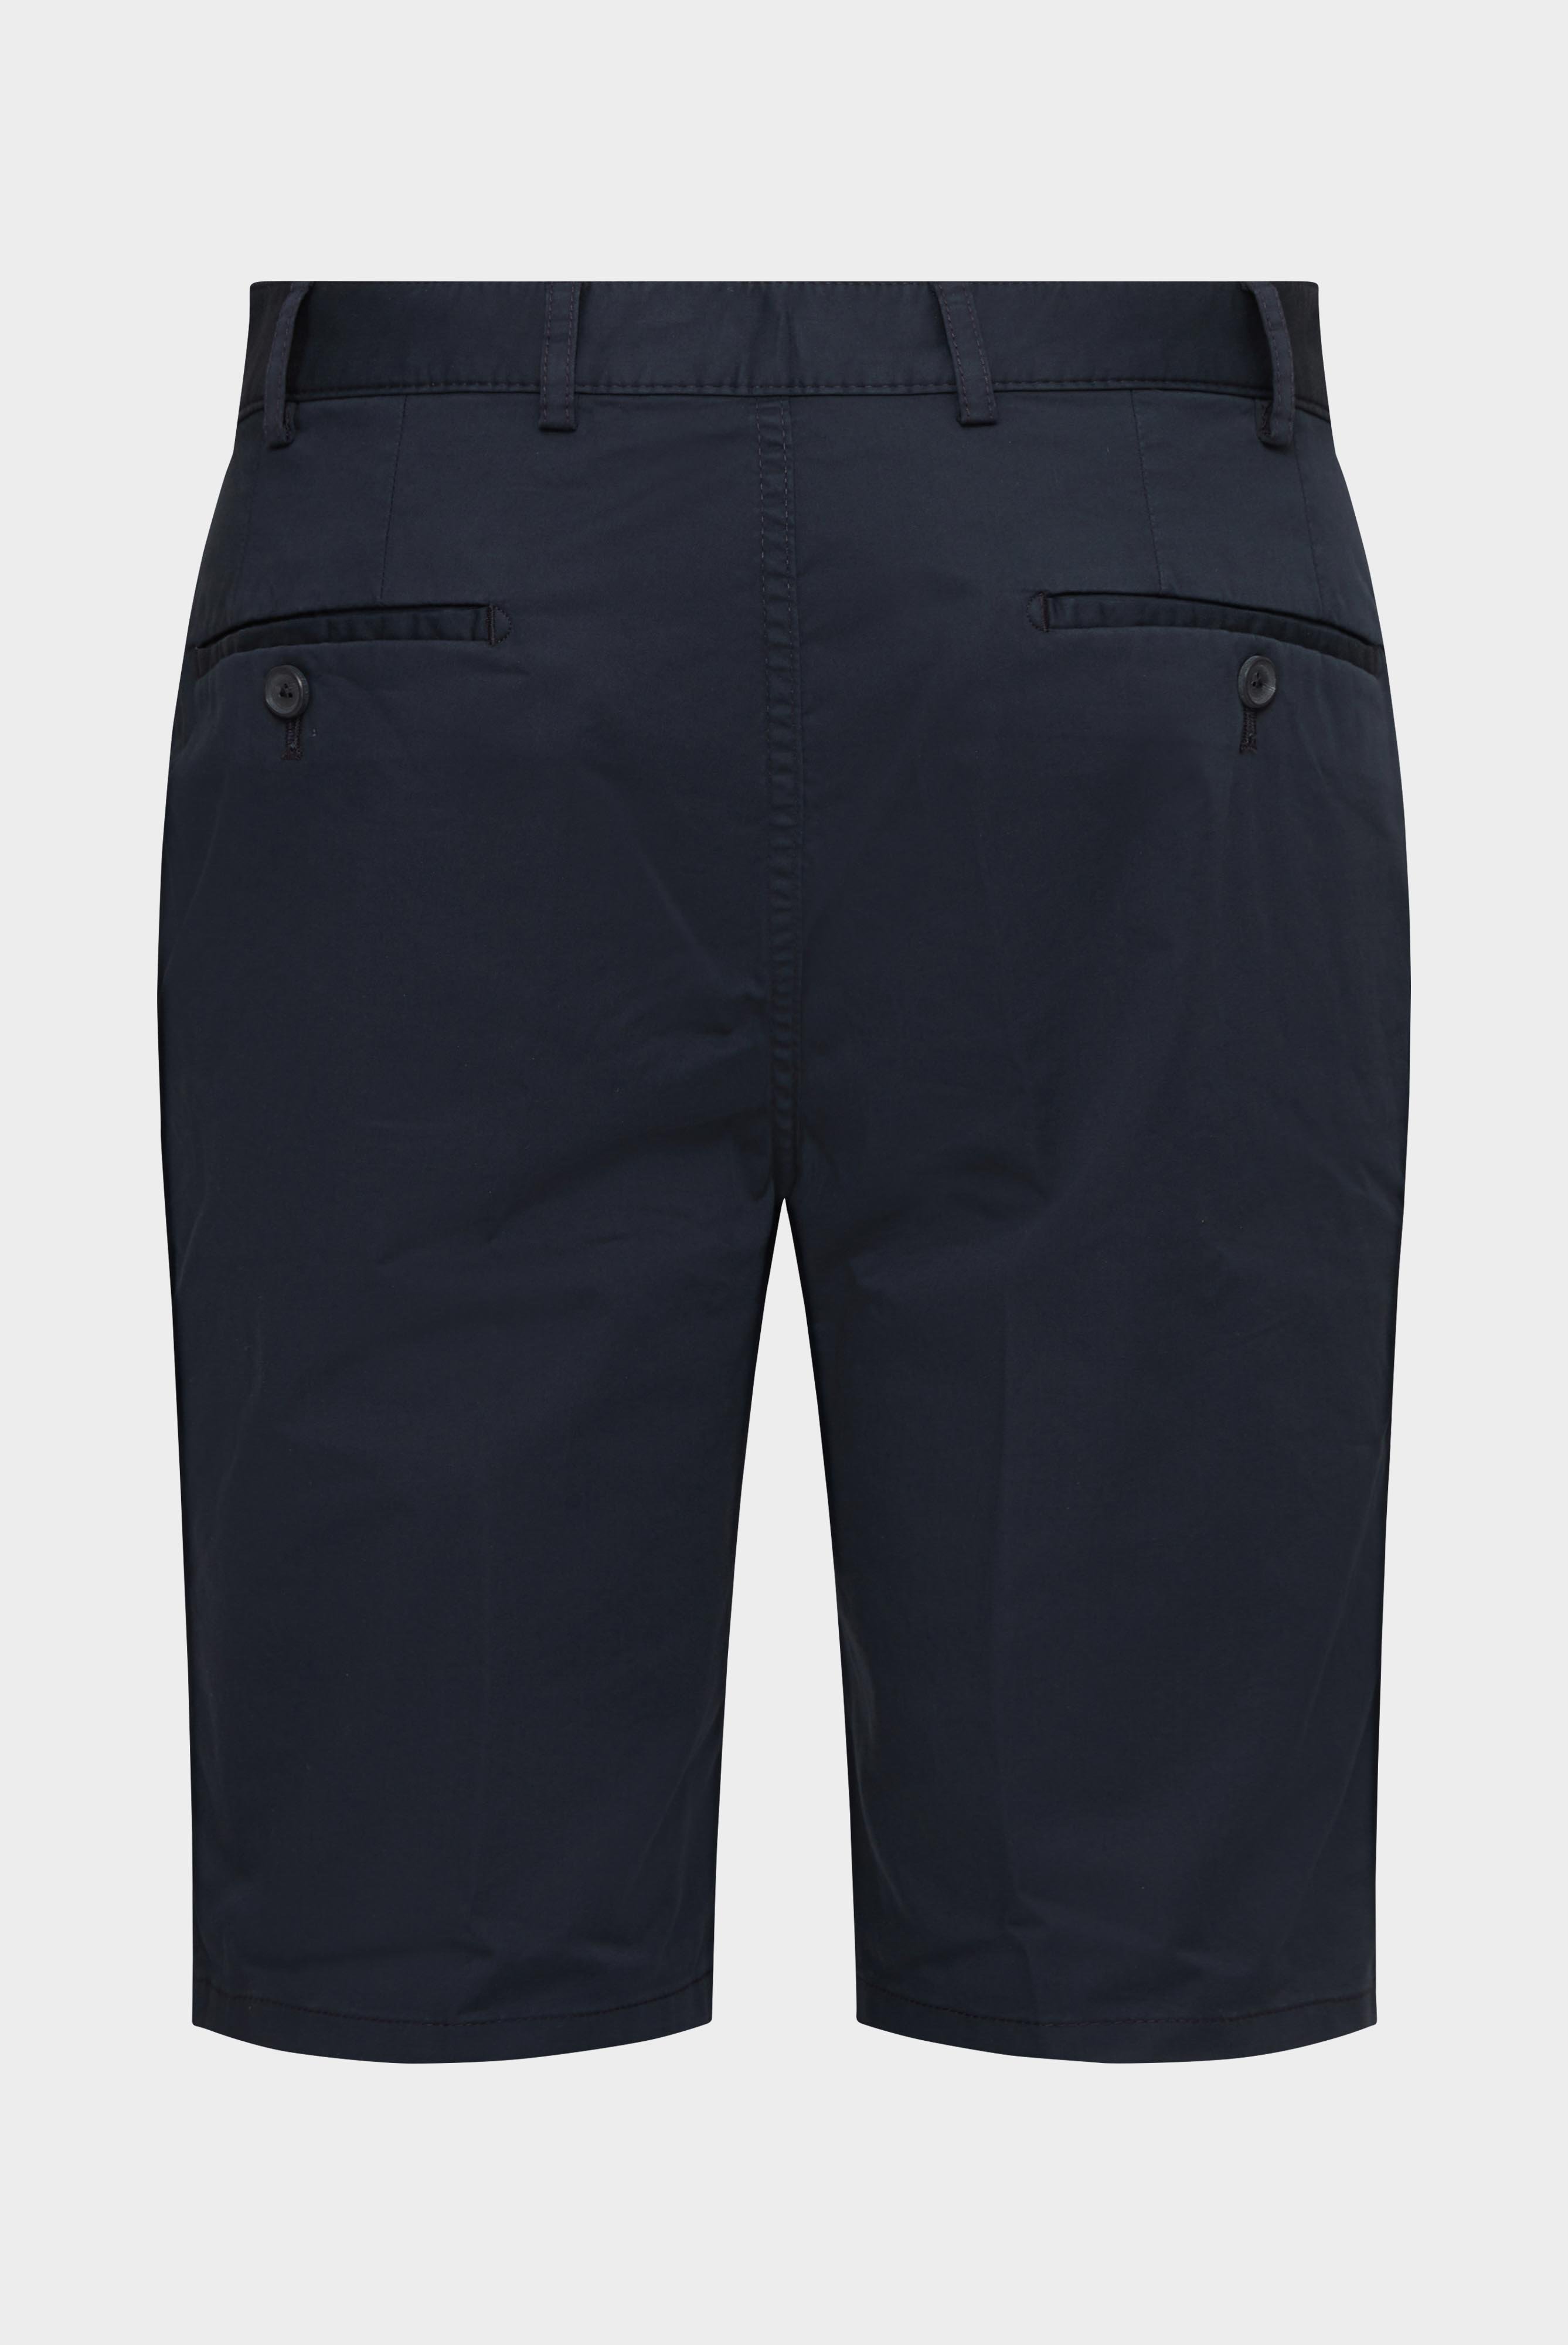 Jeans & Trousers+Men''s Bermuda shorts+80.5974..J00151.790.46